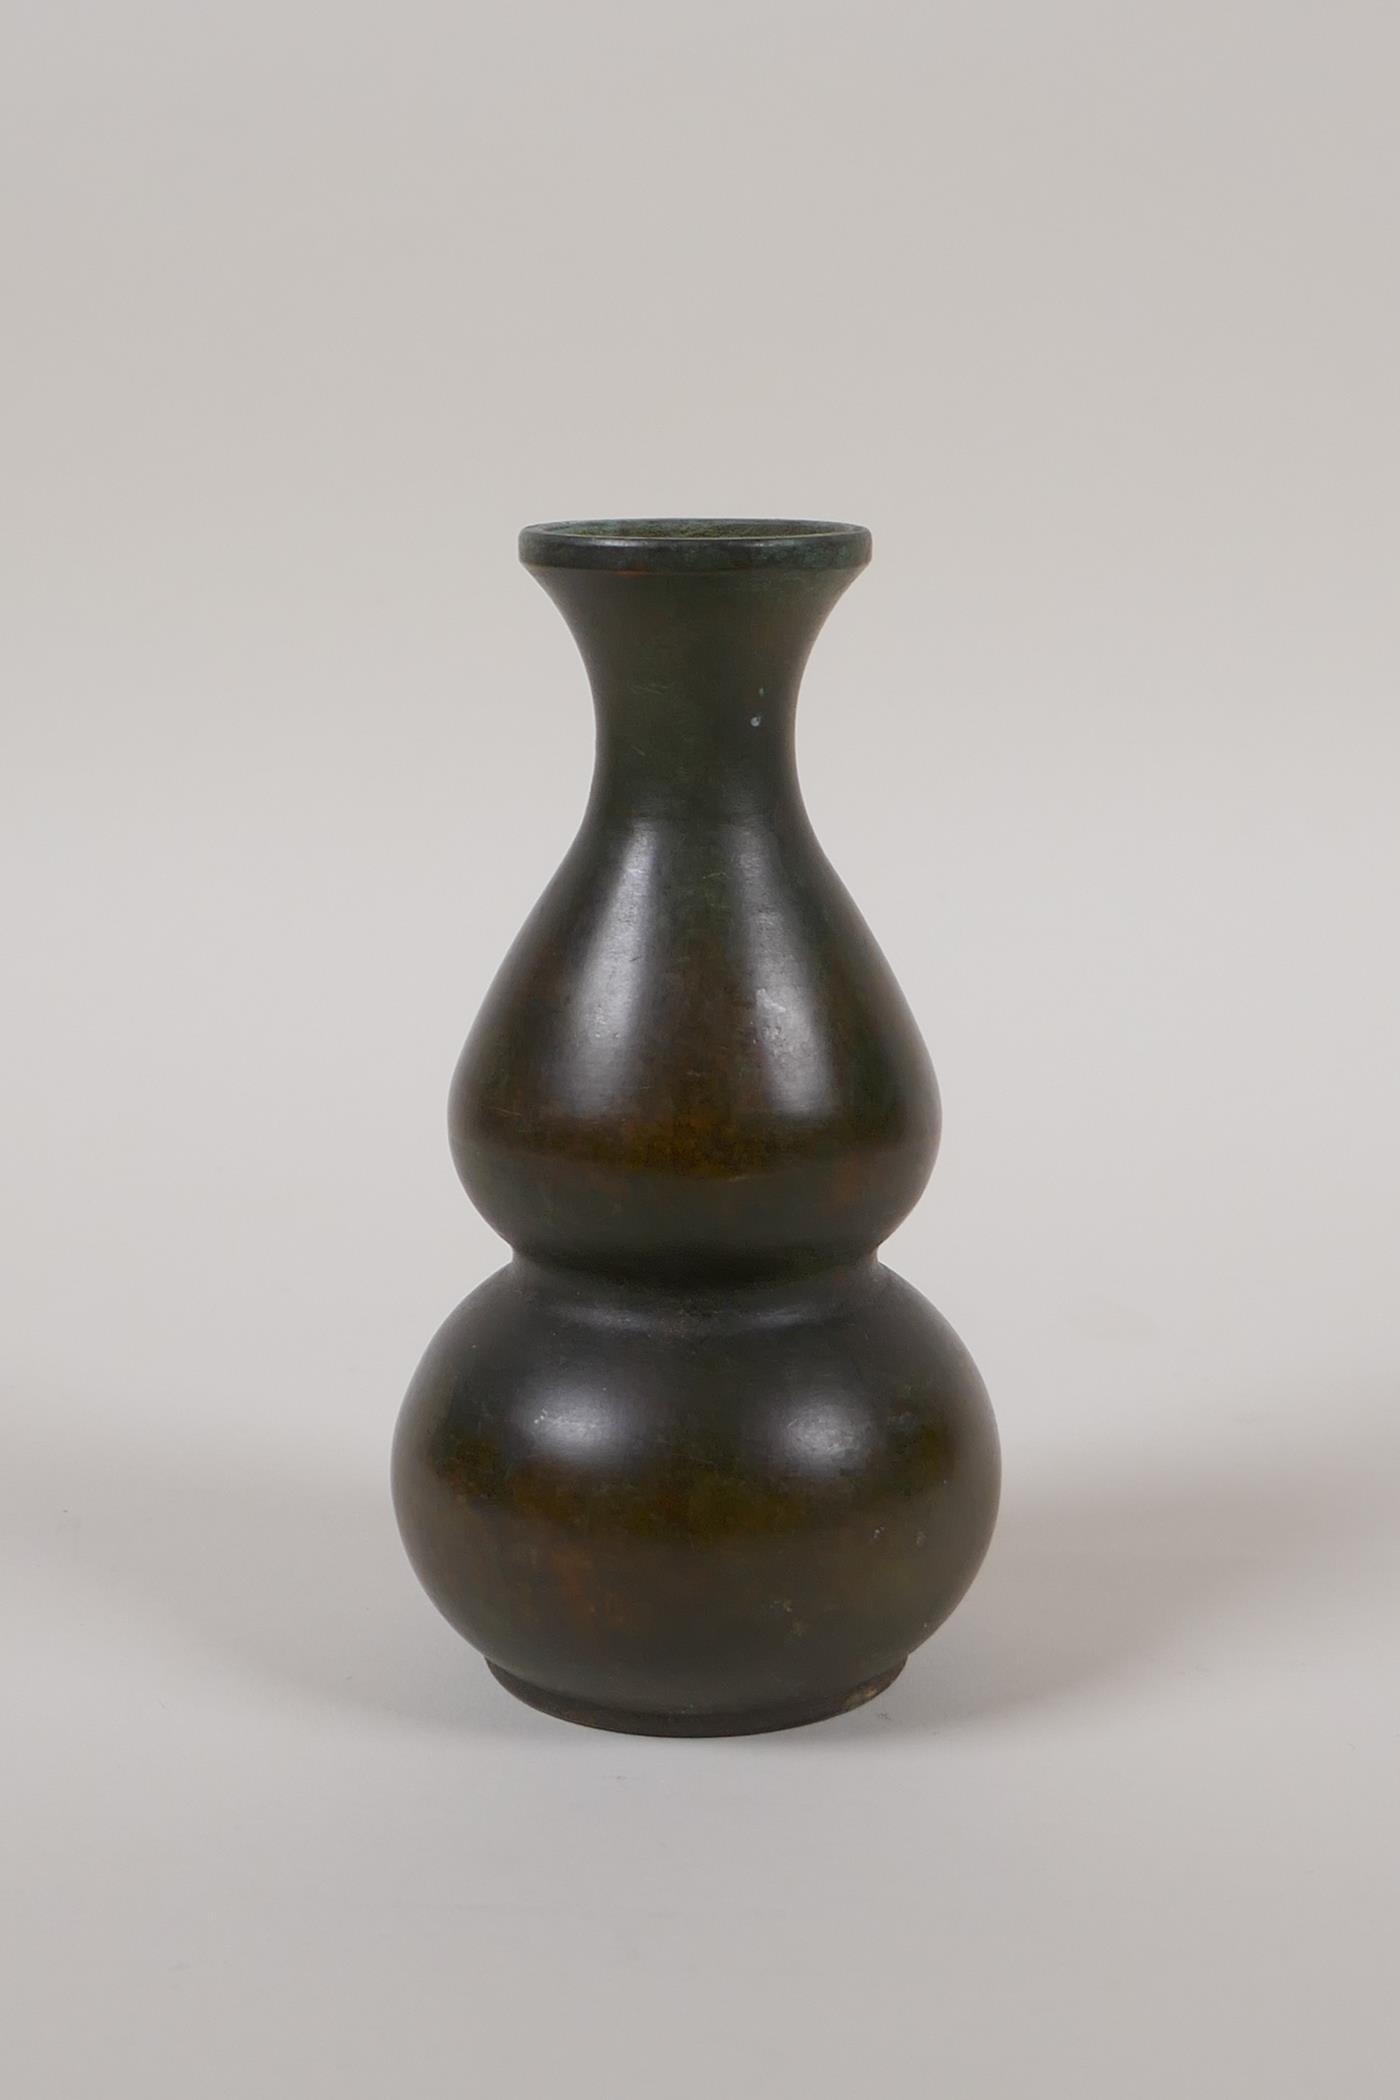 A Chinese bronze double gourd vase, impressed Yin Yang symbol to base, 5" high - Image 8 of 14